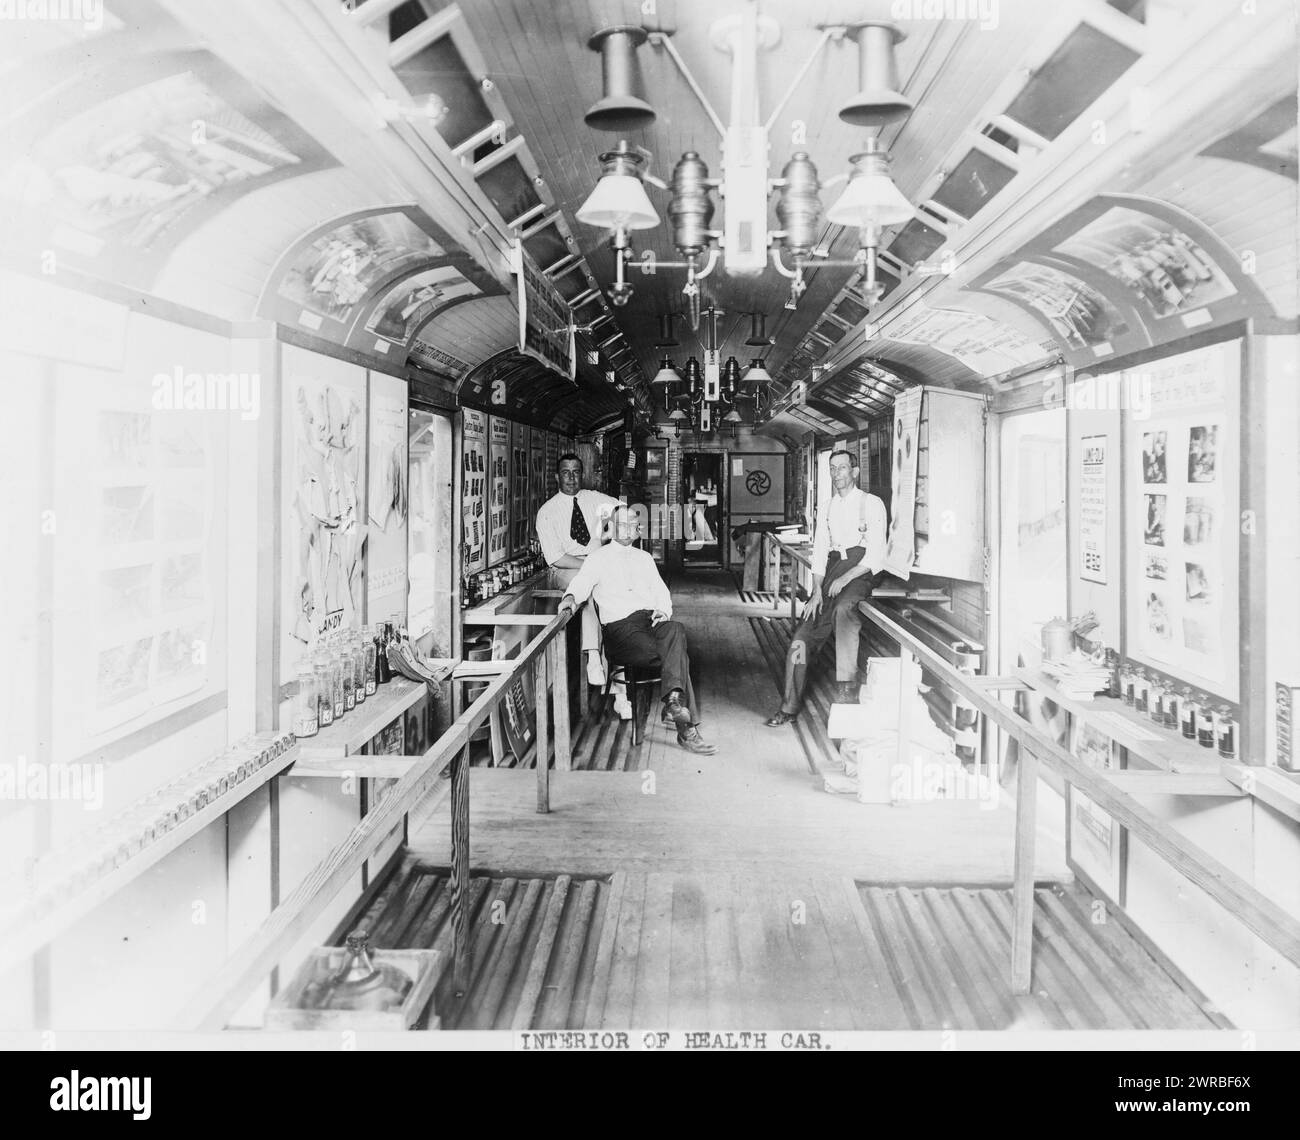 Interior of health car, Three men in a railroad car., between ca. 1910 and 1925, Health care facilities, 1910-1930, Photographic. prints, 1910-1930., Photographic. prints, 1910-1930, 1 photographic. print Stock Photo